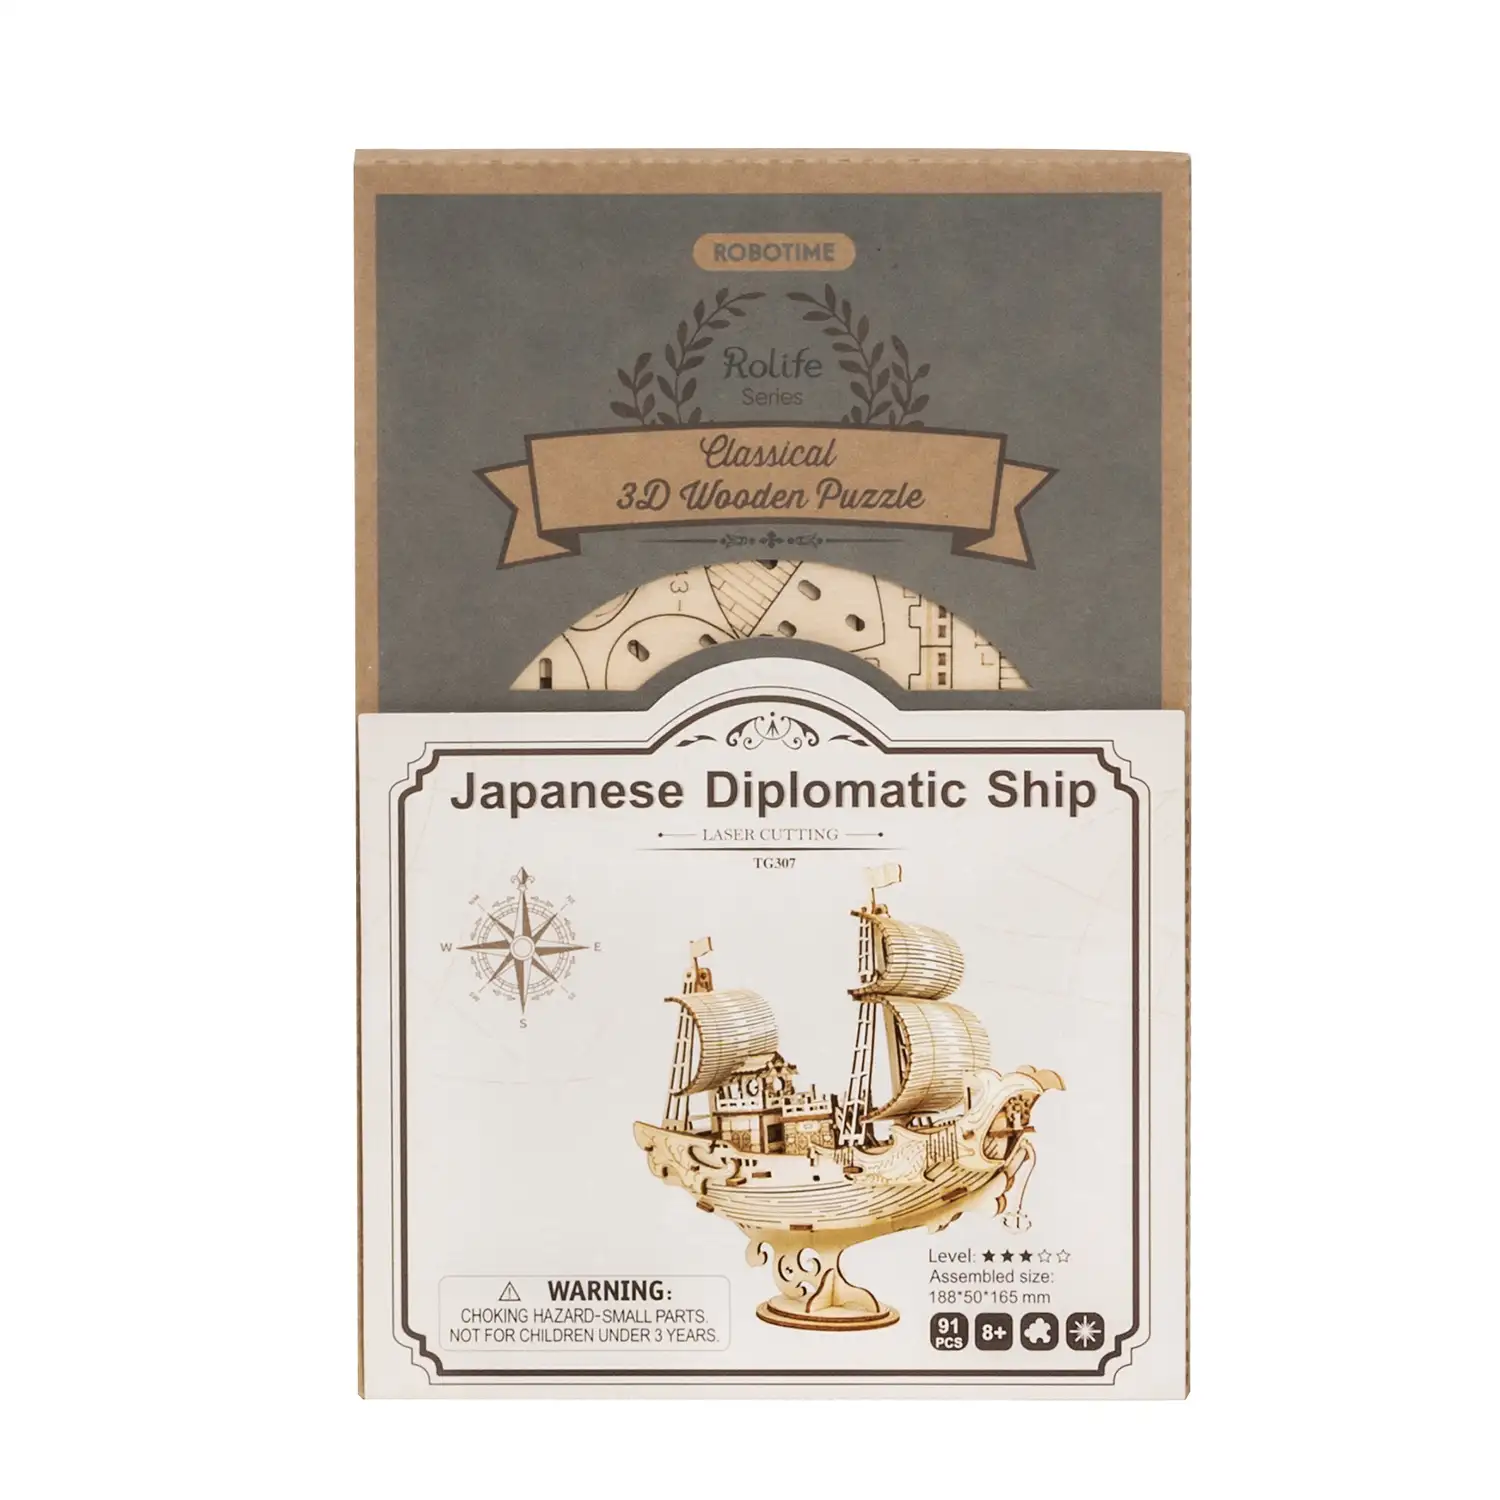 Barco diplomático Japonés. Maqueta 3D realista con gran detalle, 91 piezas.